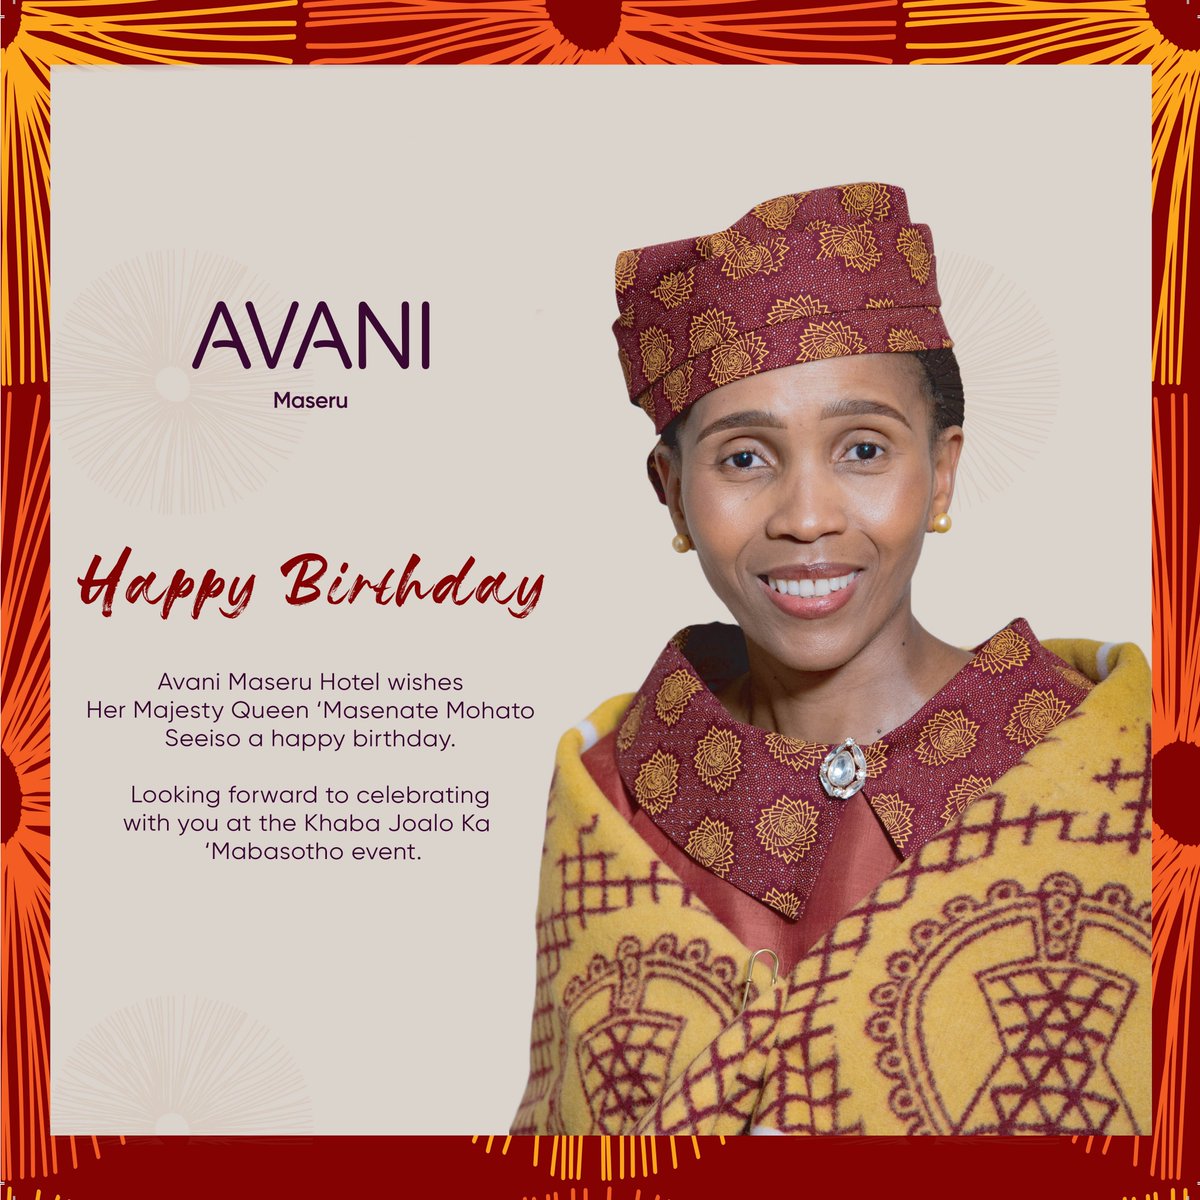 Happy birthday to Her Majesty Queen `Masente Mohato Seeiso. 💜🎂🎉

#avani #avanihotels #avanimaseru